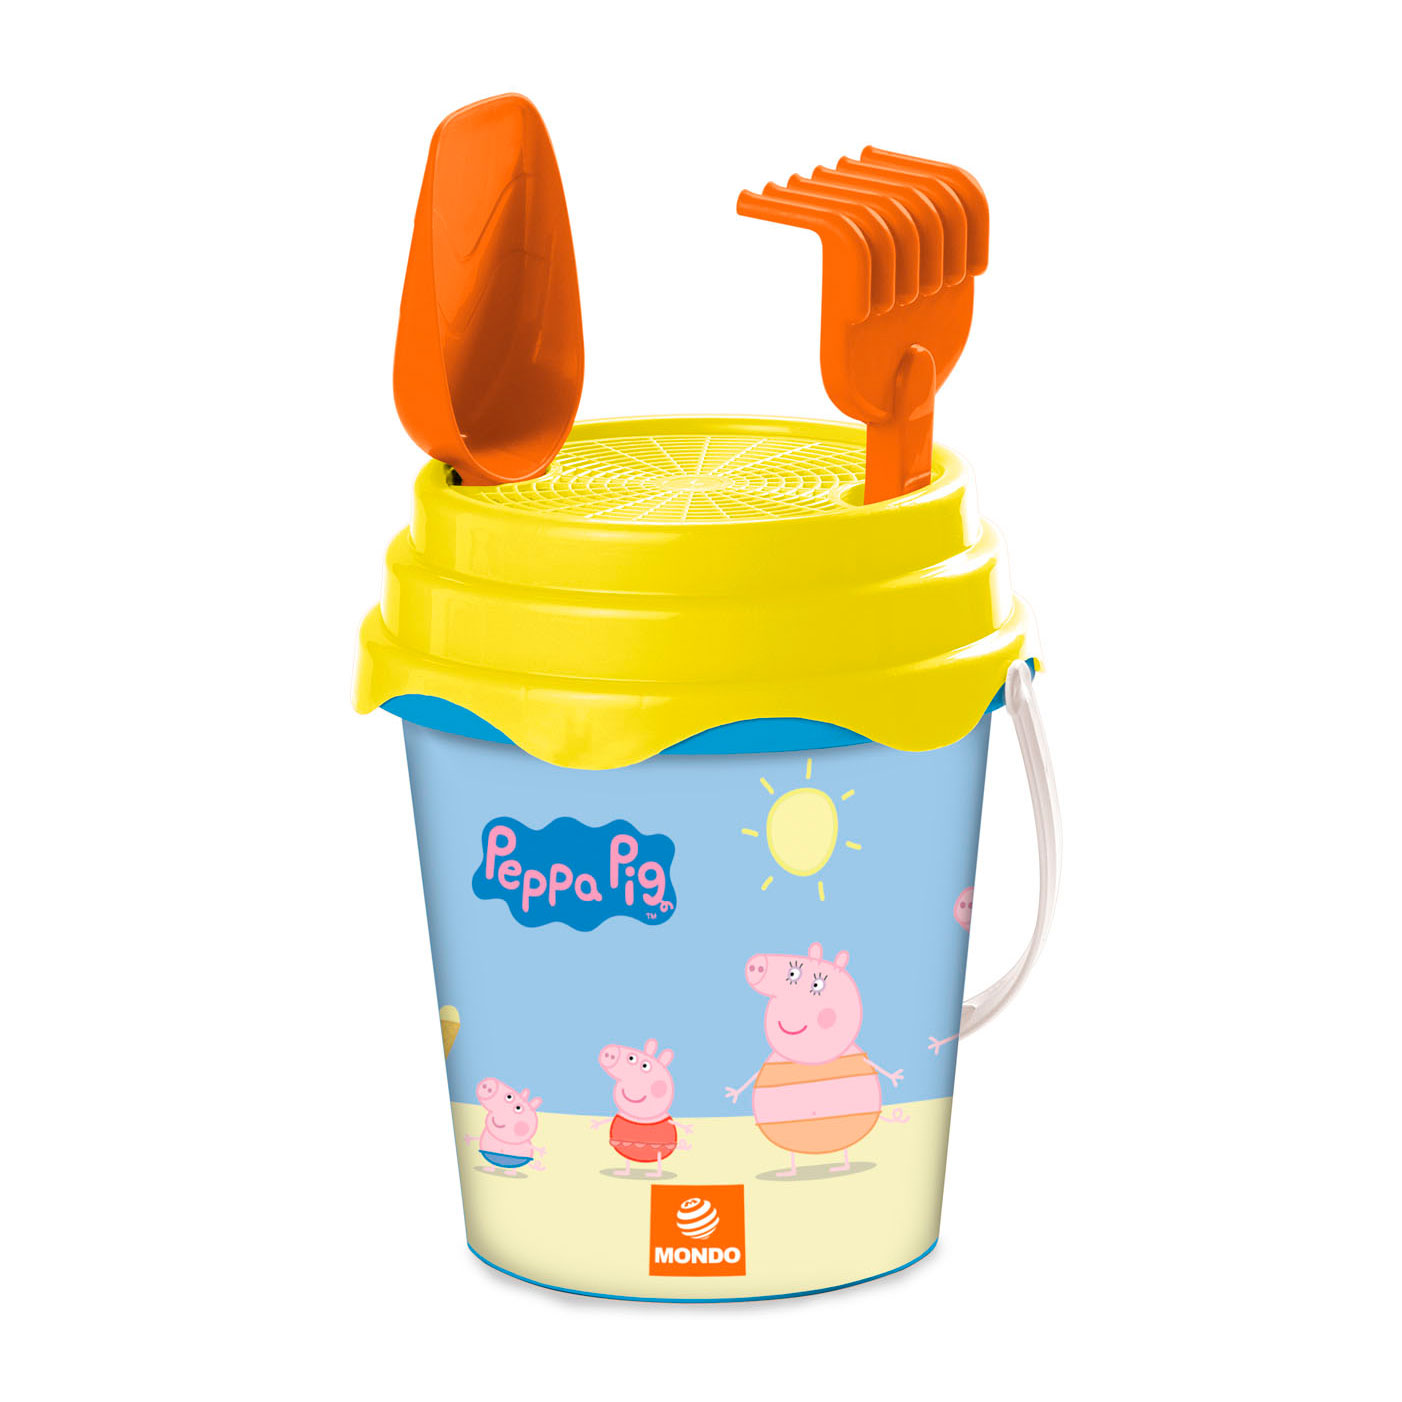 Color baby Peppa Pig Beach Bucket Orange